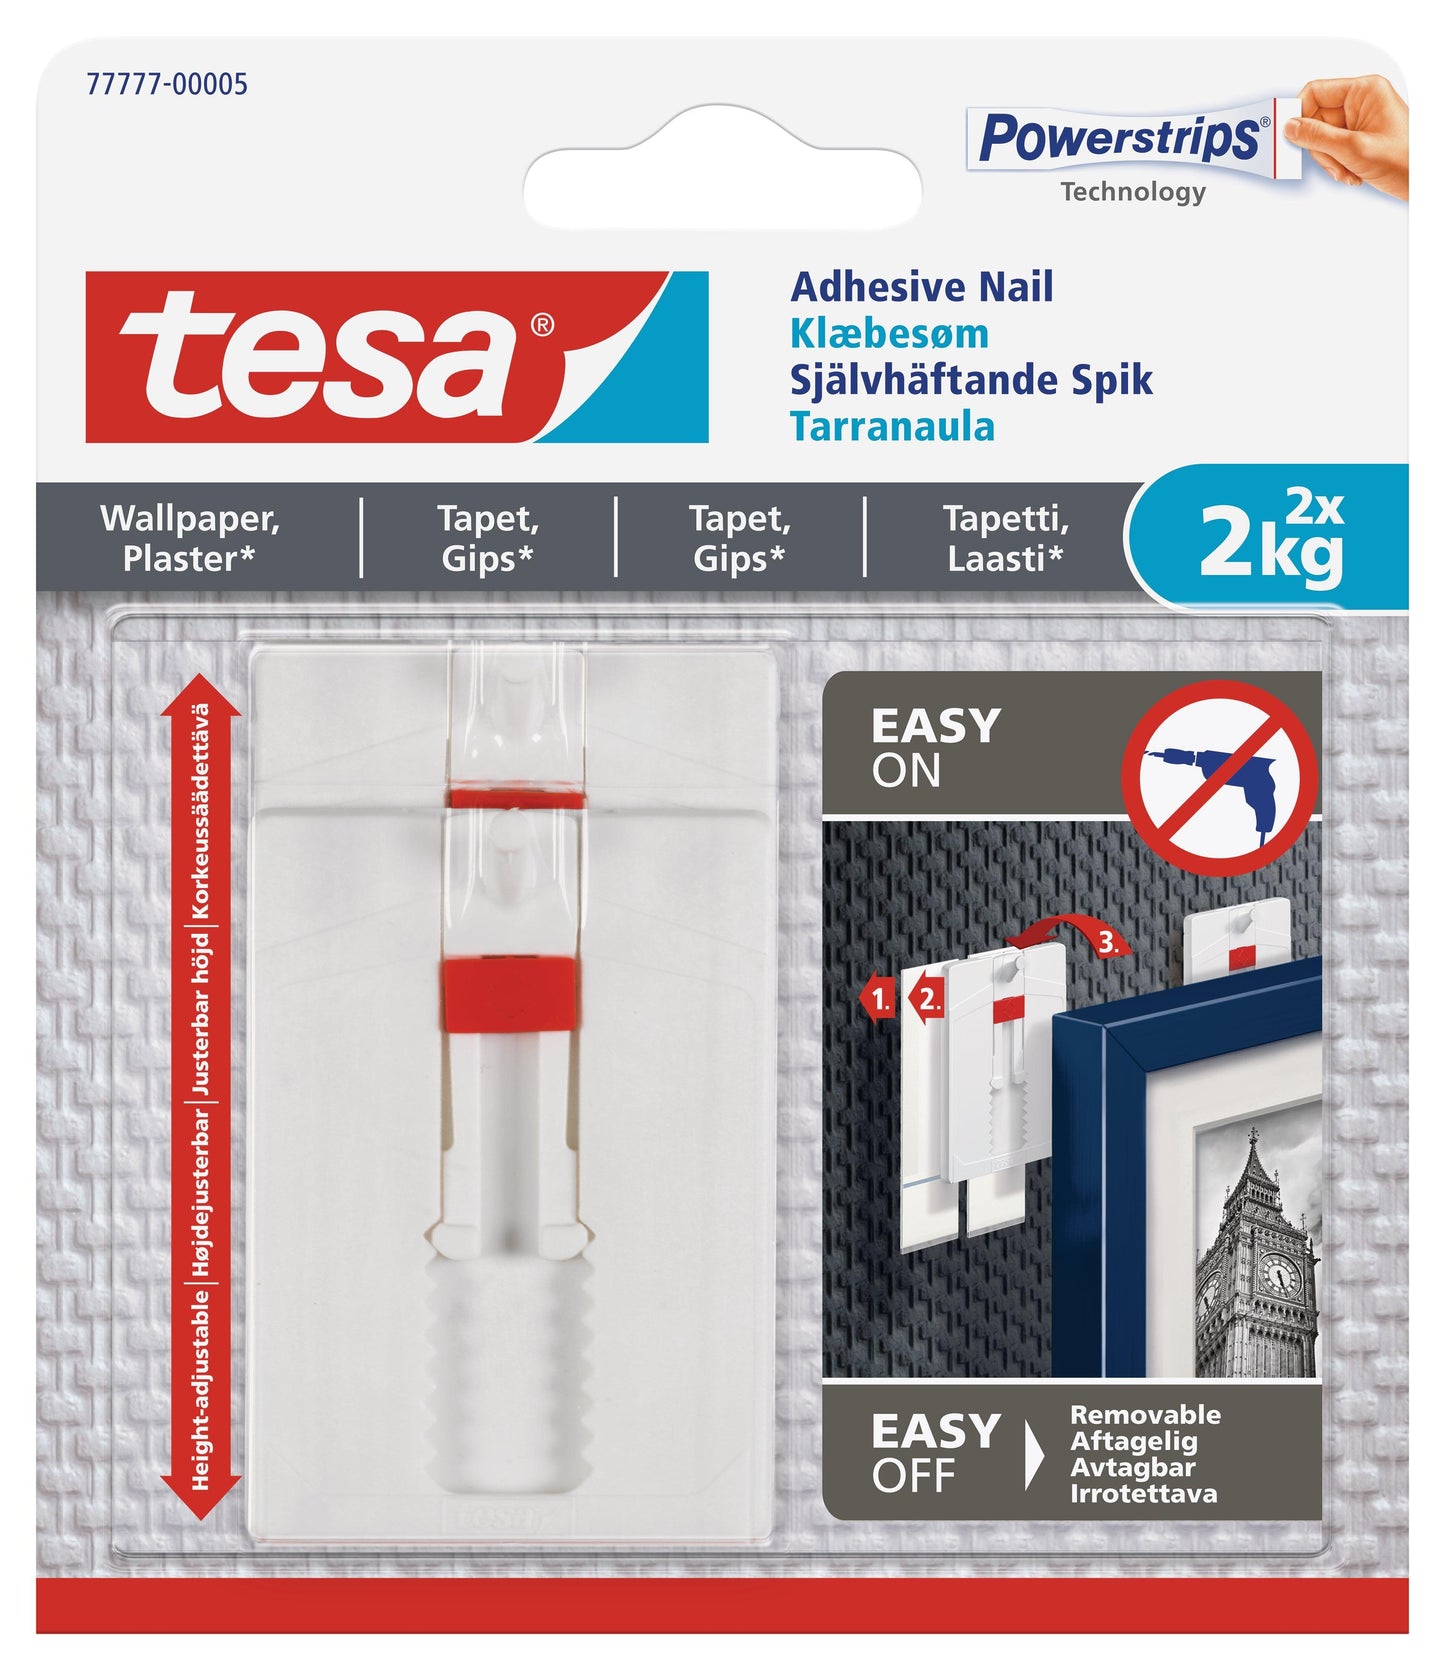 TESA Adhesive Nails Adjustable 2x2kg - Sensitive Surfaces - Wallpaper and Plaster - Premium Hardware from TESA - Just R 132! Shop now at Securadeal